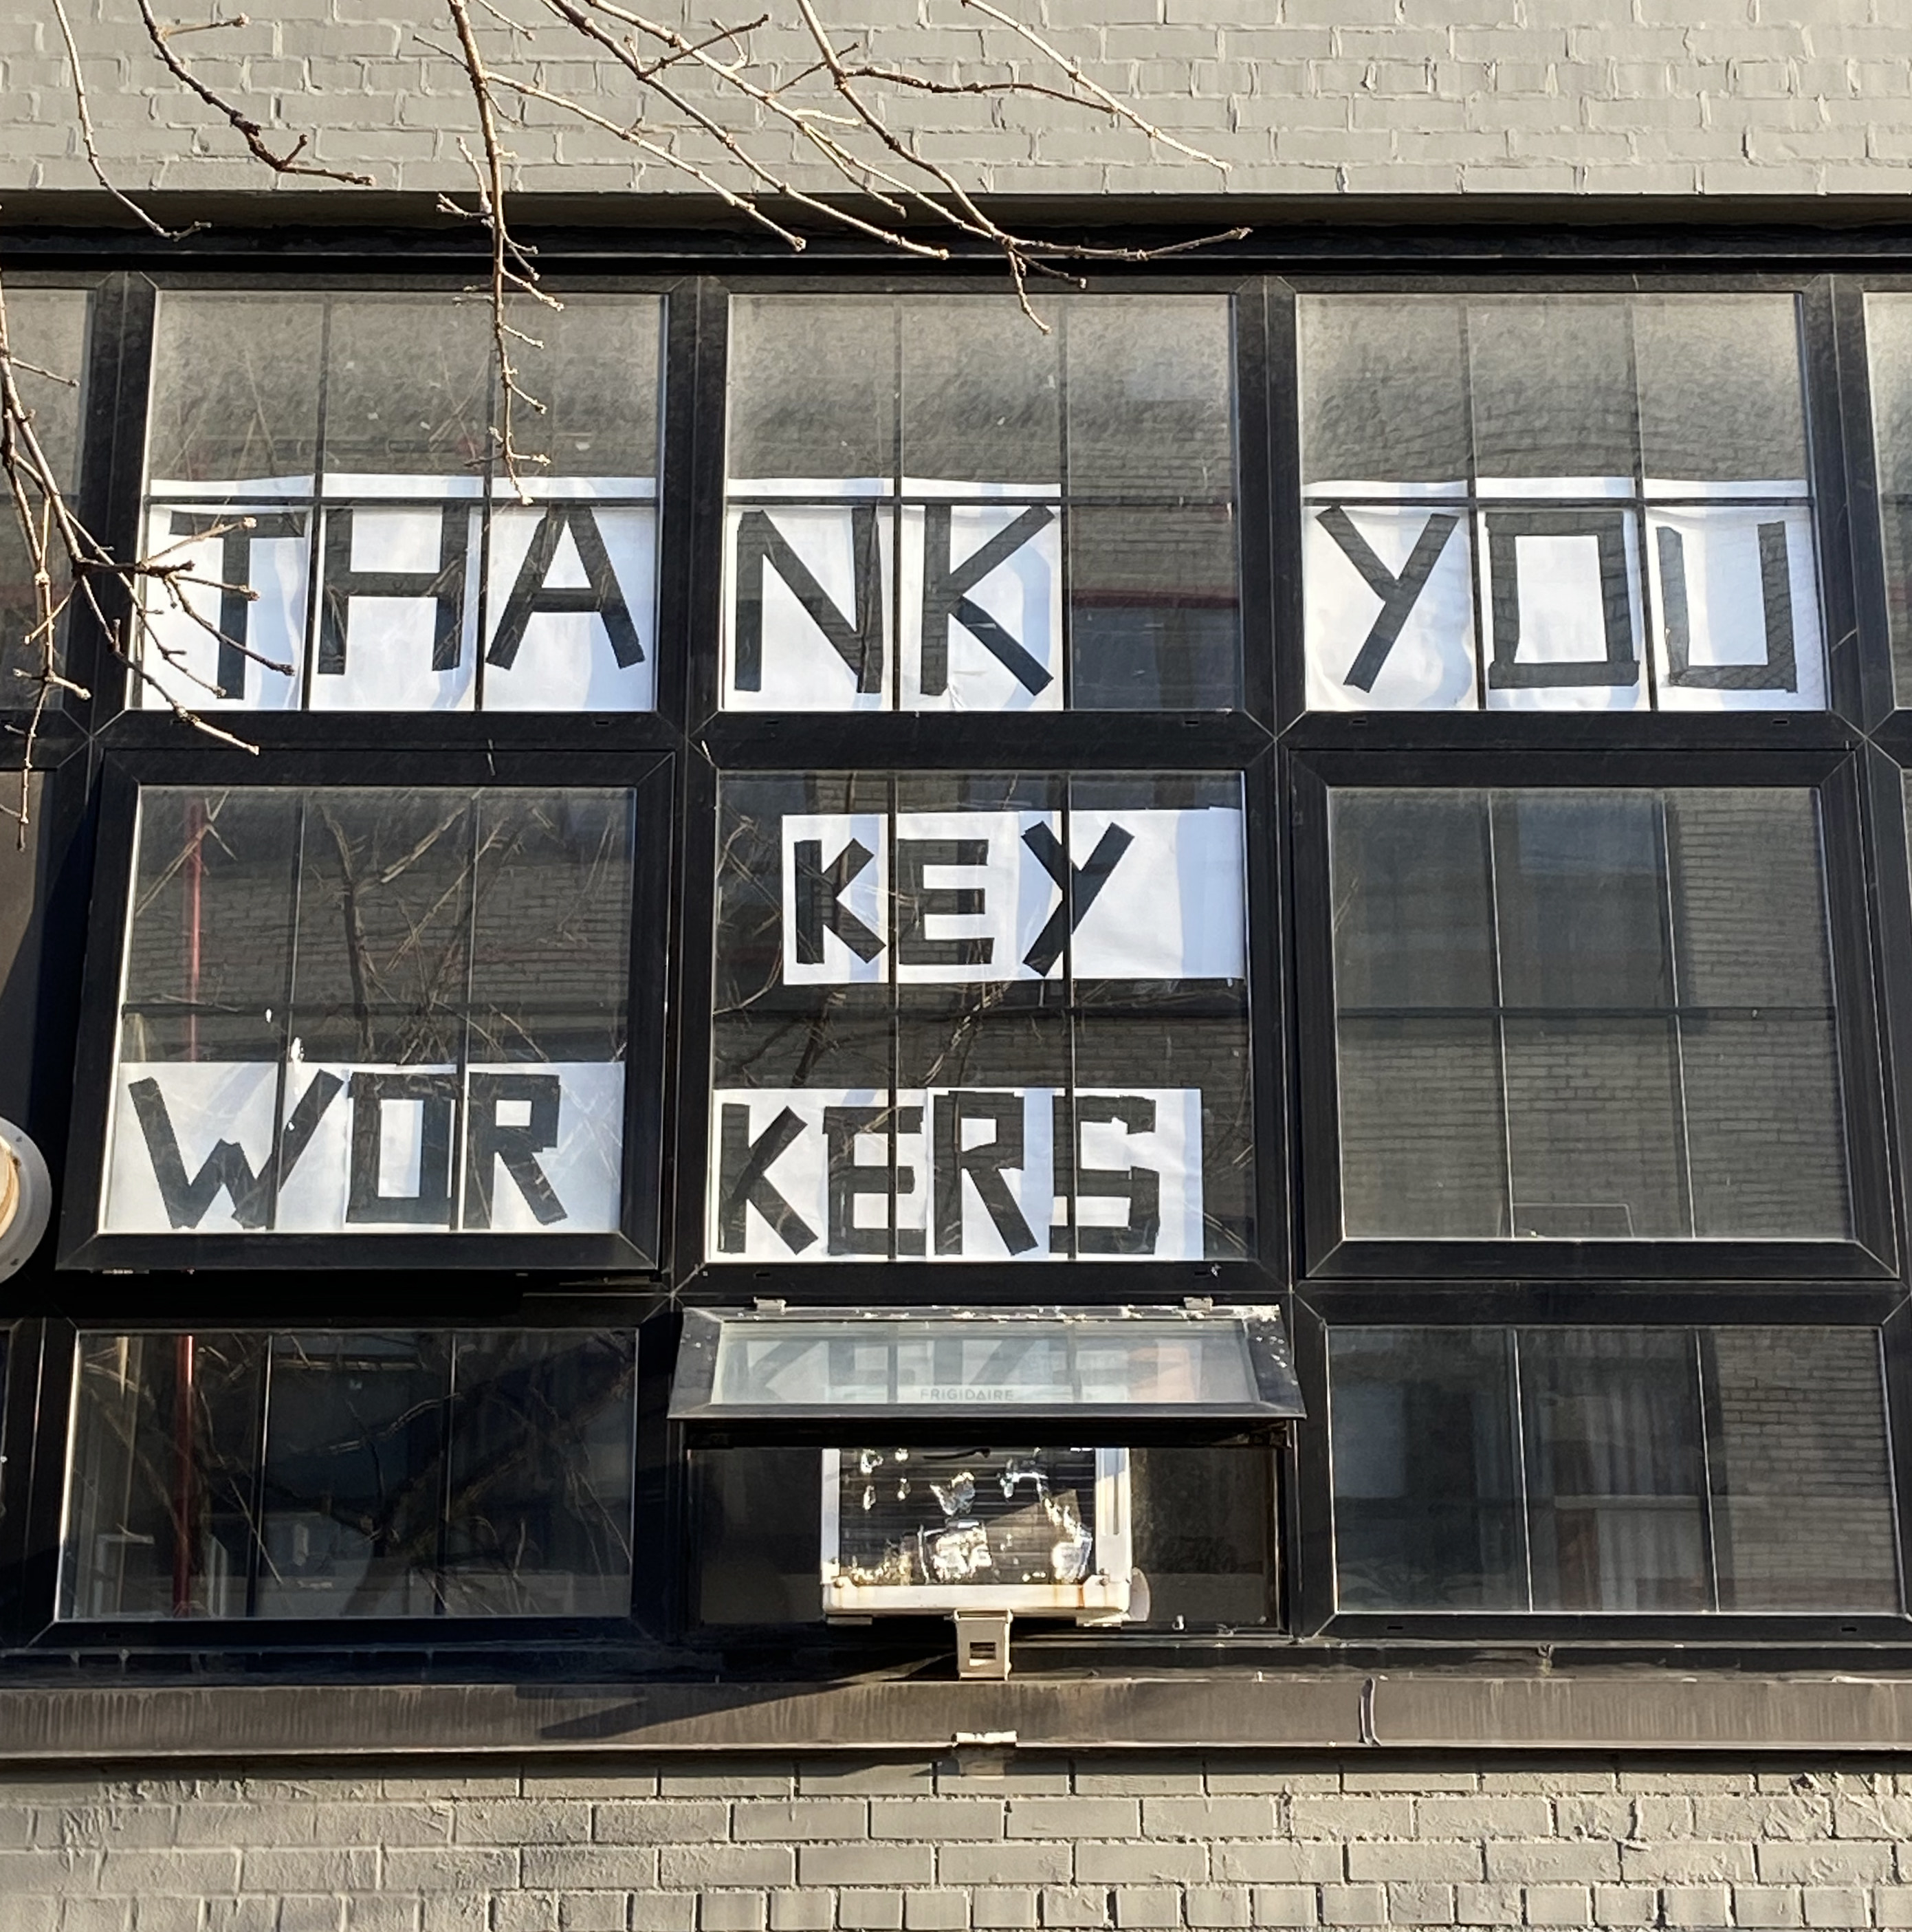 Thank You Key Workers written on windows